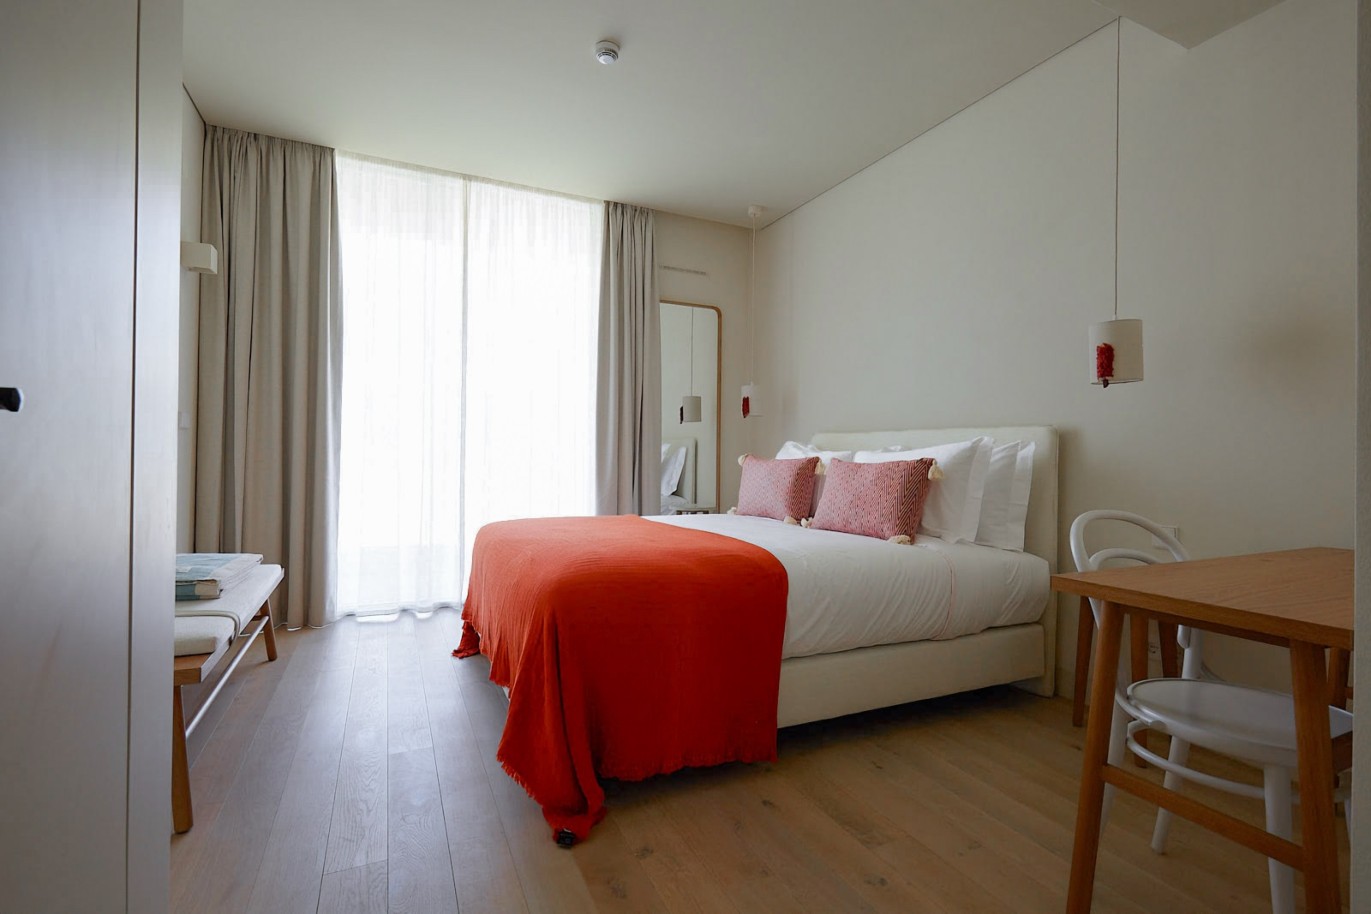 2 bedroom apartment in resort, for sale in Porches, Algarve_230562